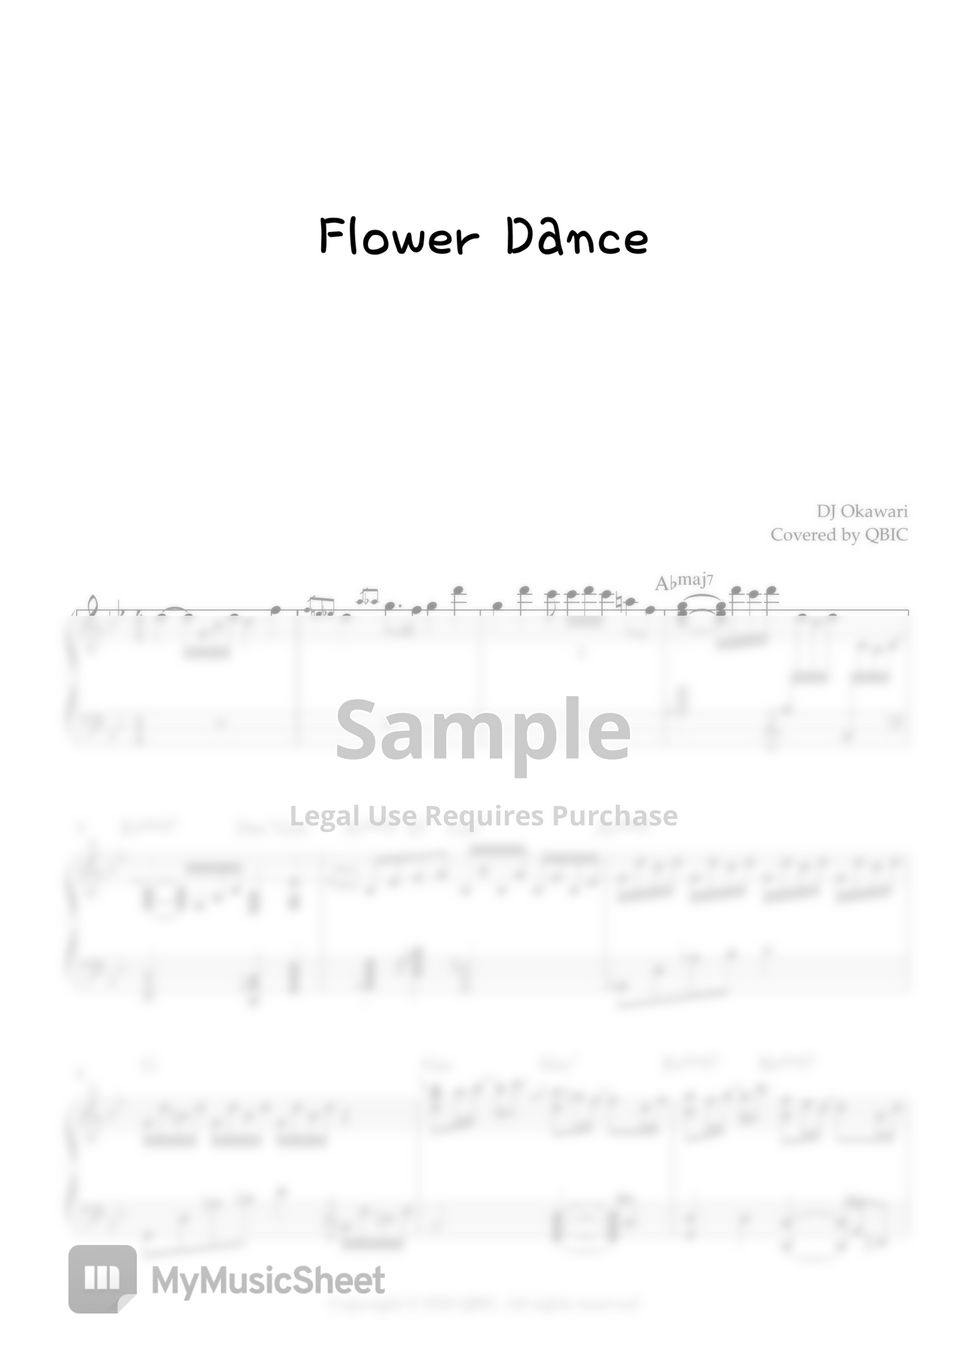 DJ Okawari - Flower Dance by QBIC